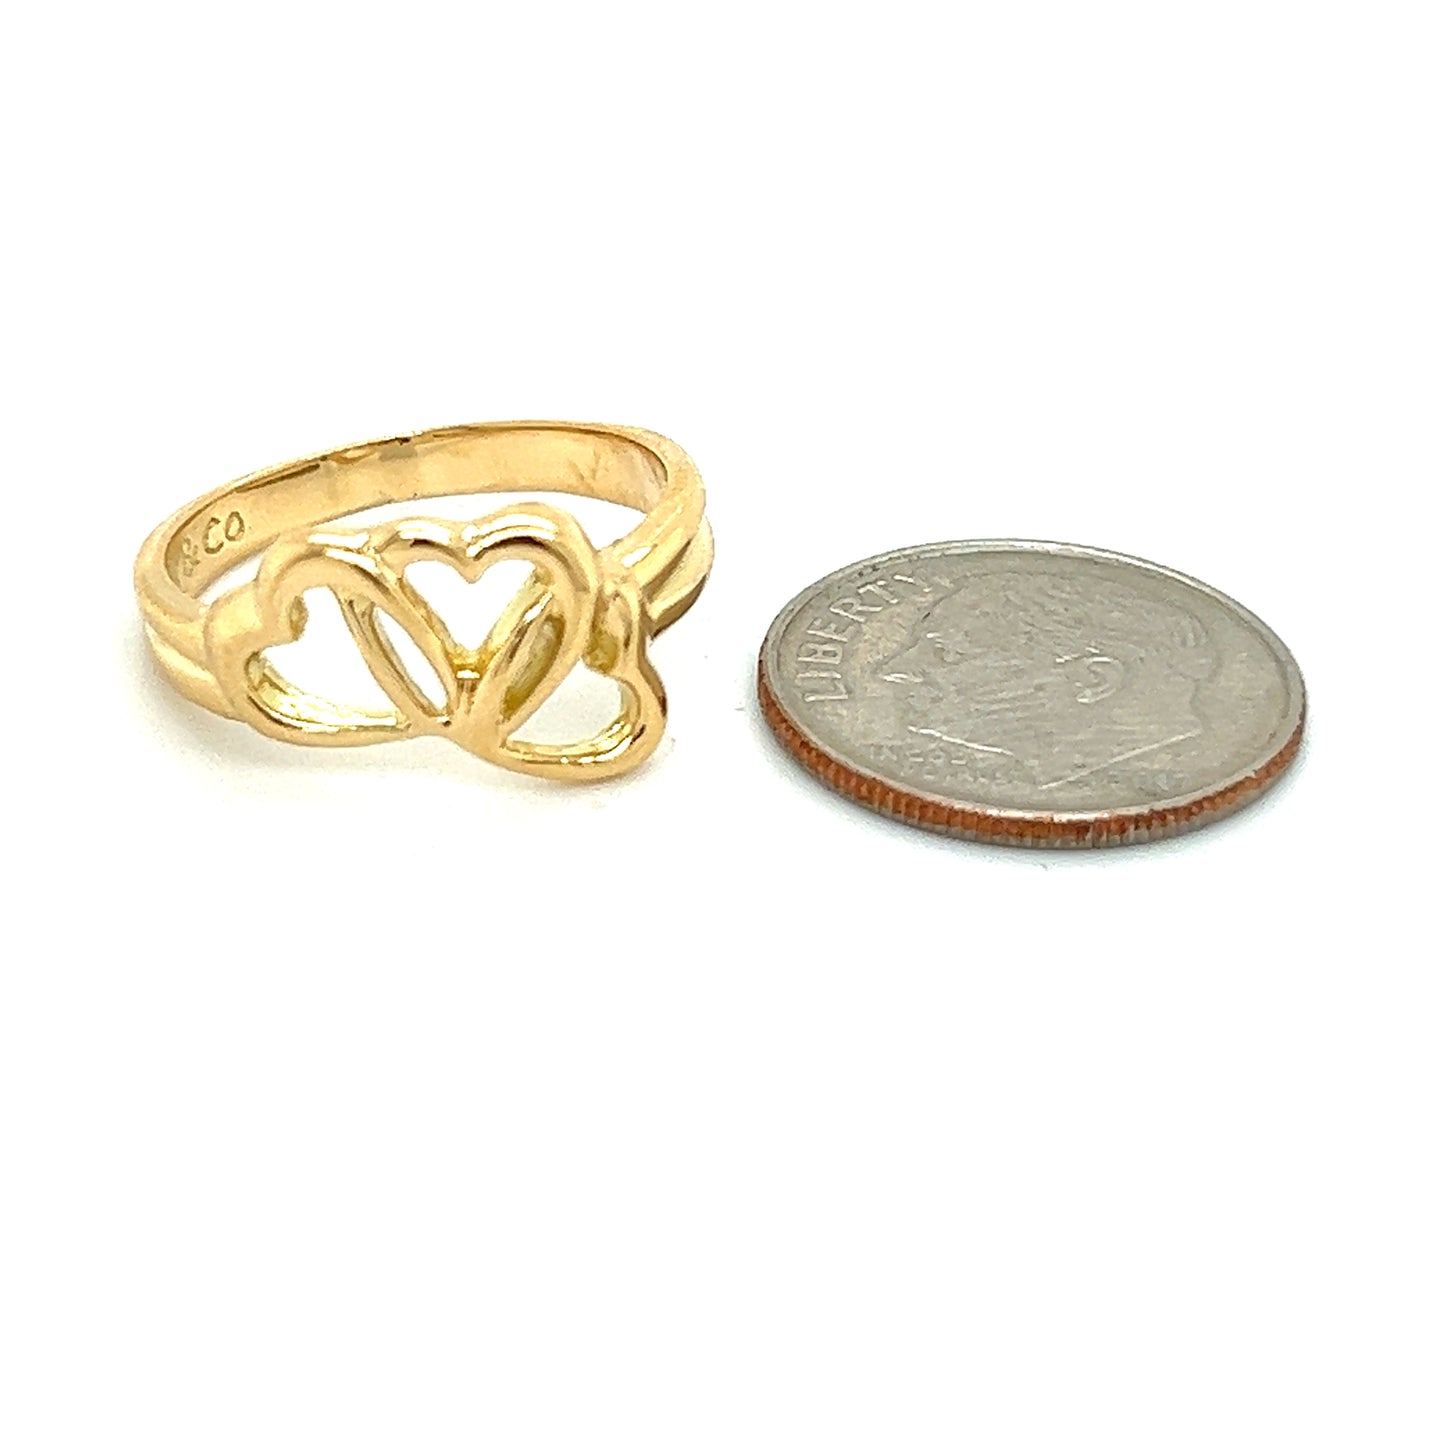 Tiffany & Co Estate Ring Size 5.5 18k Y Gold TIF326 - Certified Fine Jewelry